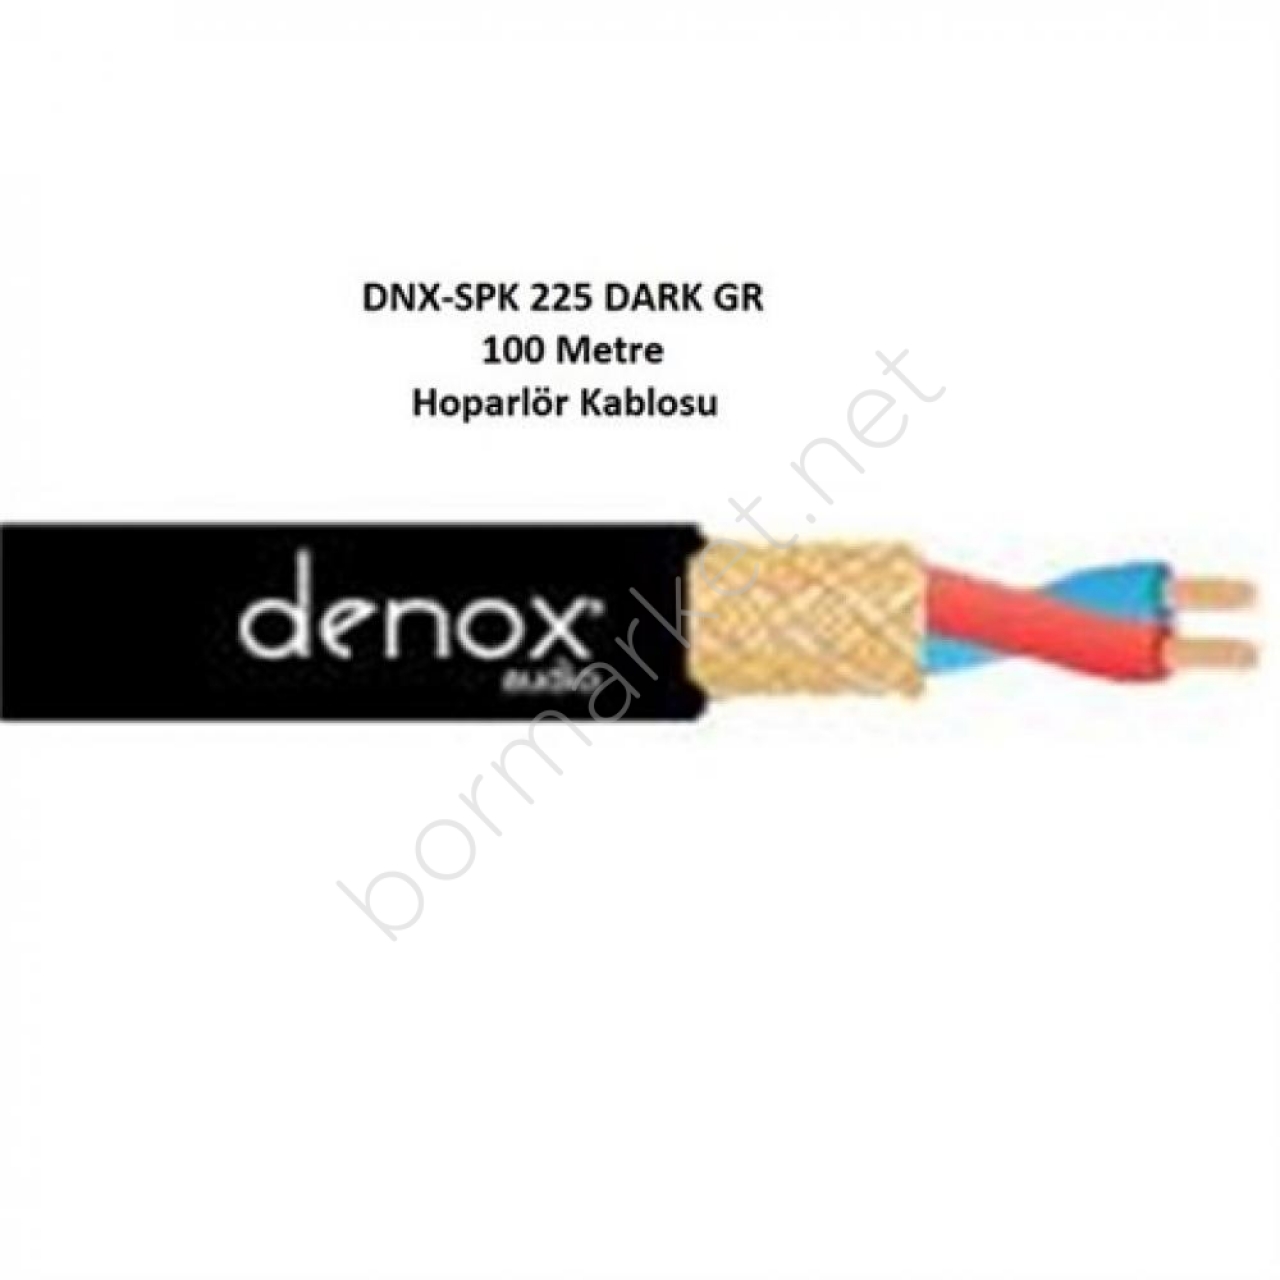 Denox DNX-SPK 225 DARK GR 100 2x2.5 mm Hoparlör Kablosu - 100 Metre"